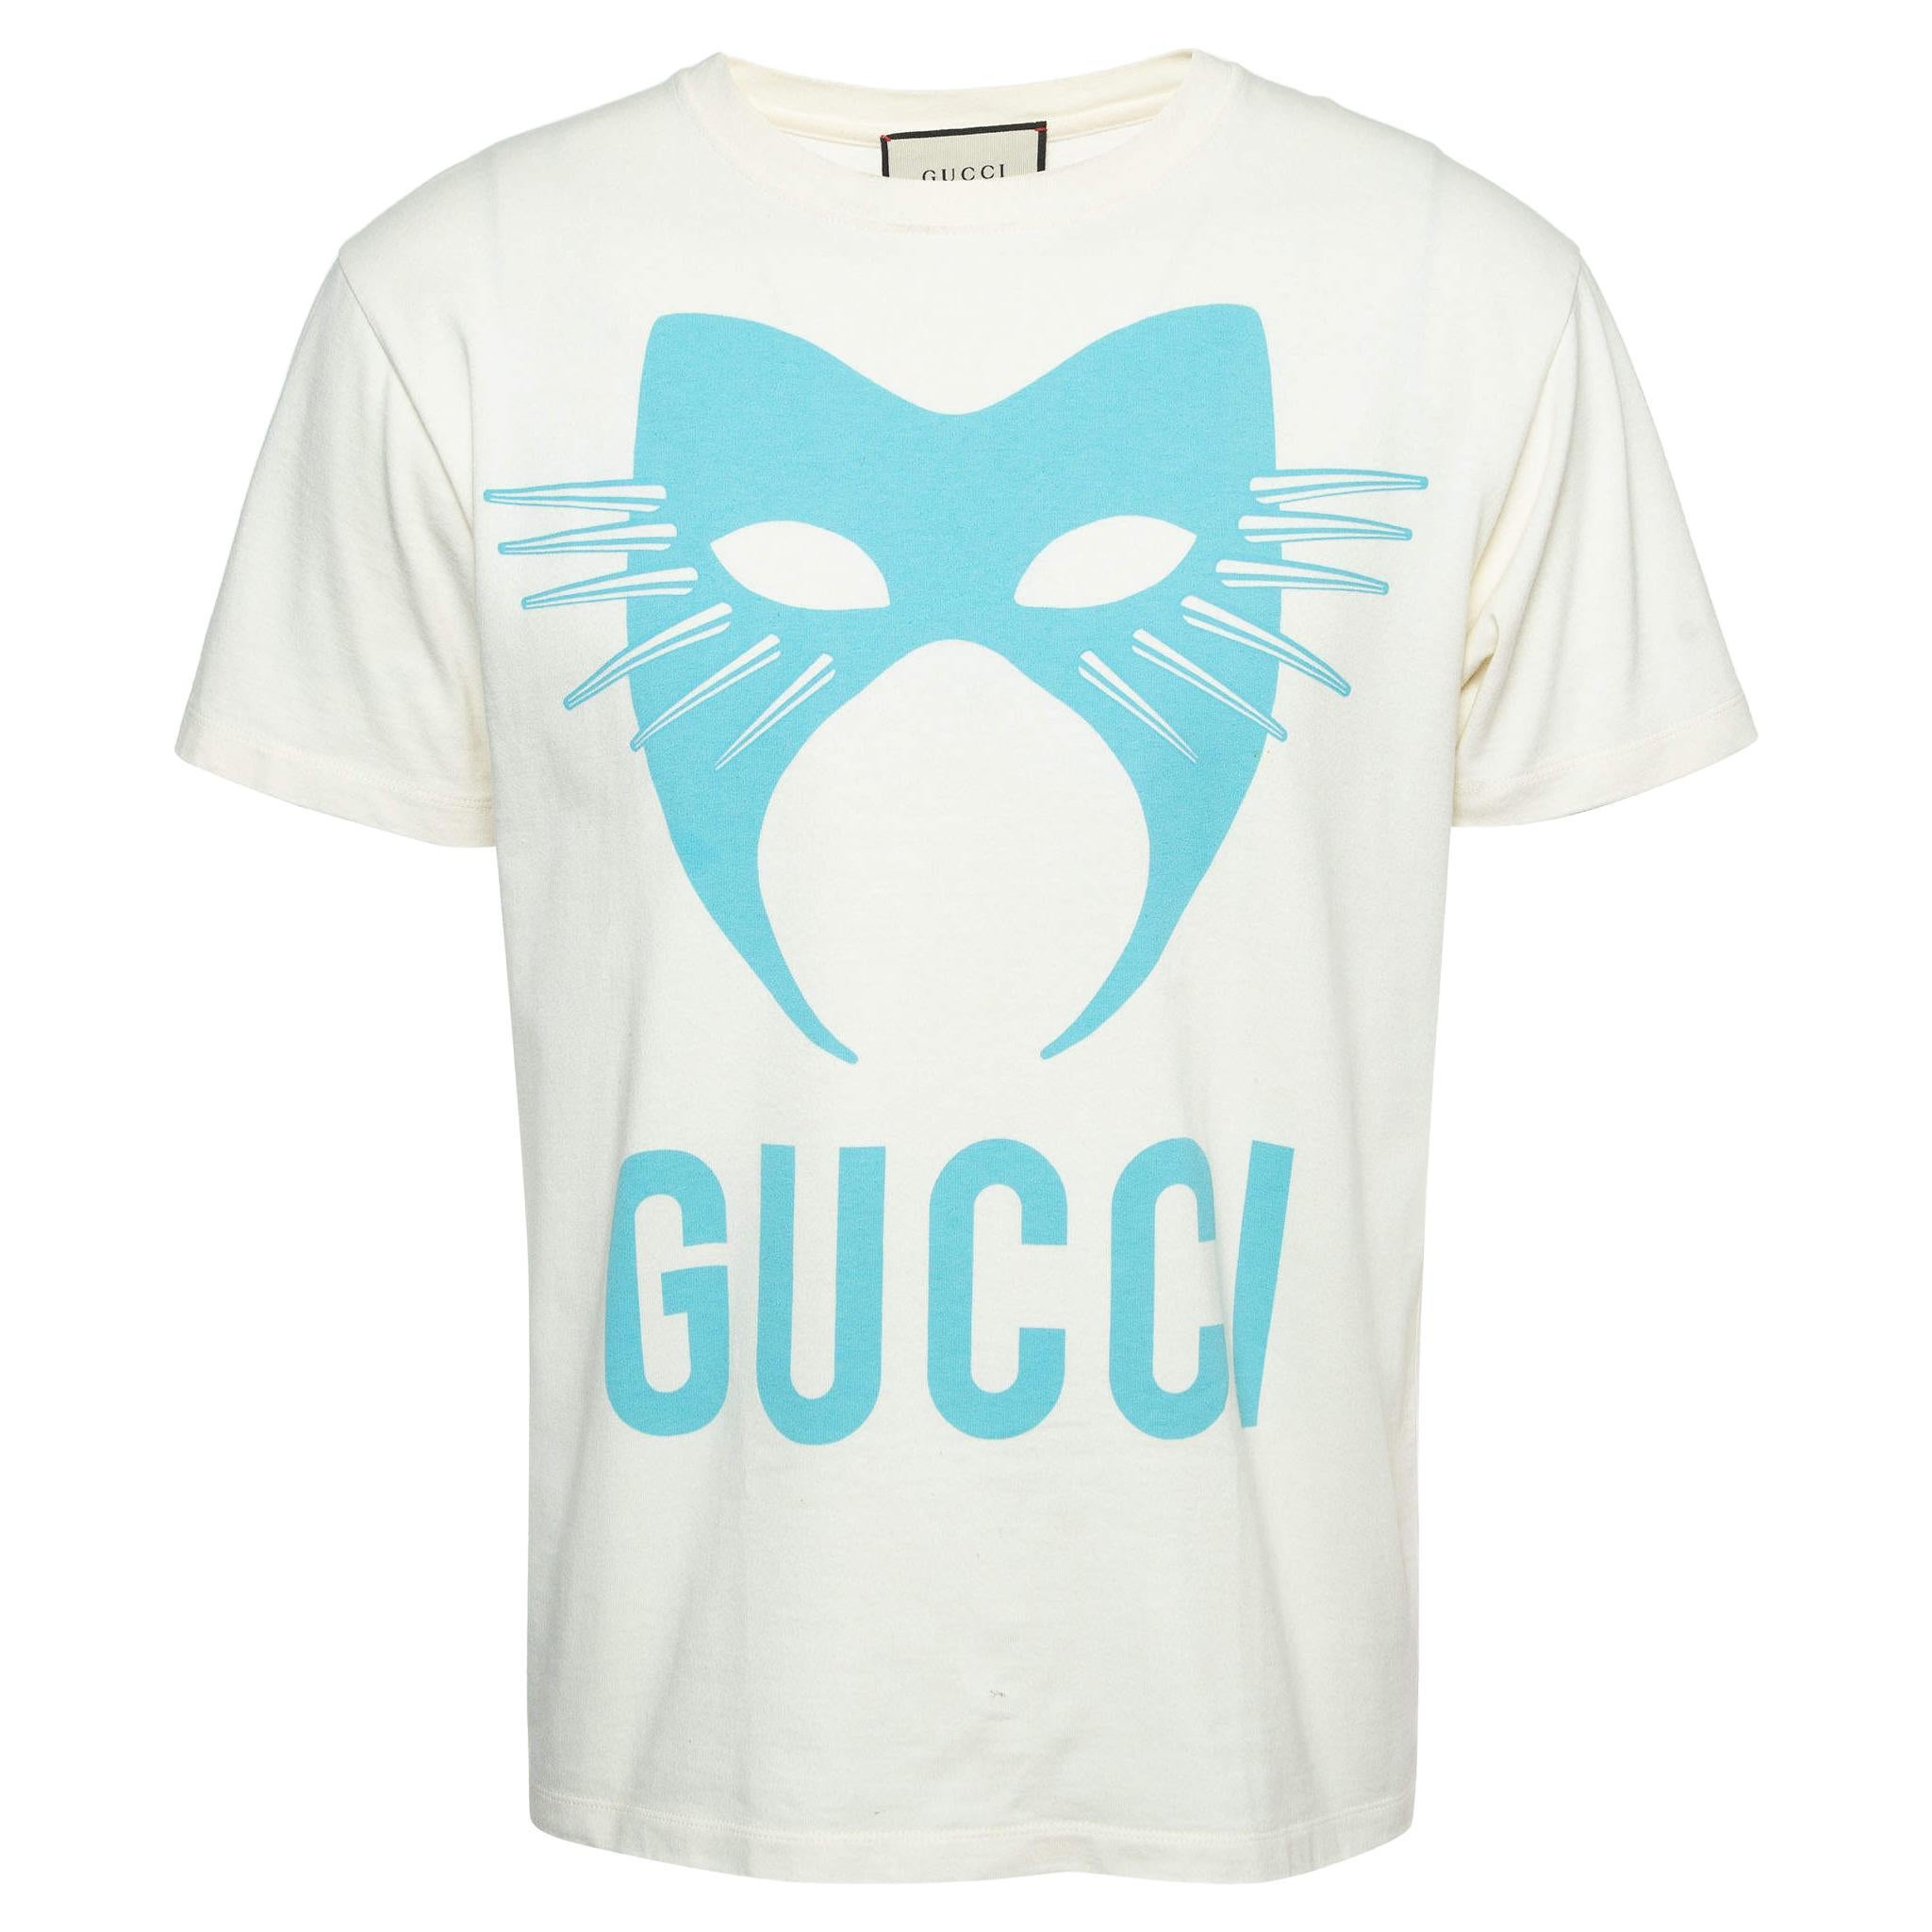 Gucci Cream Printed Cotton Crewneck T-Shirt XS